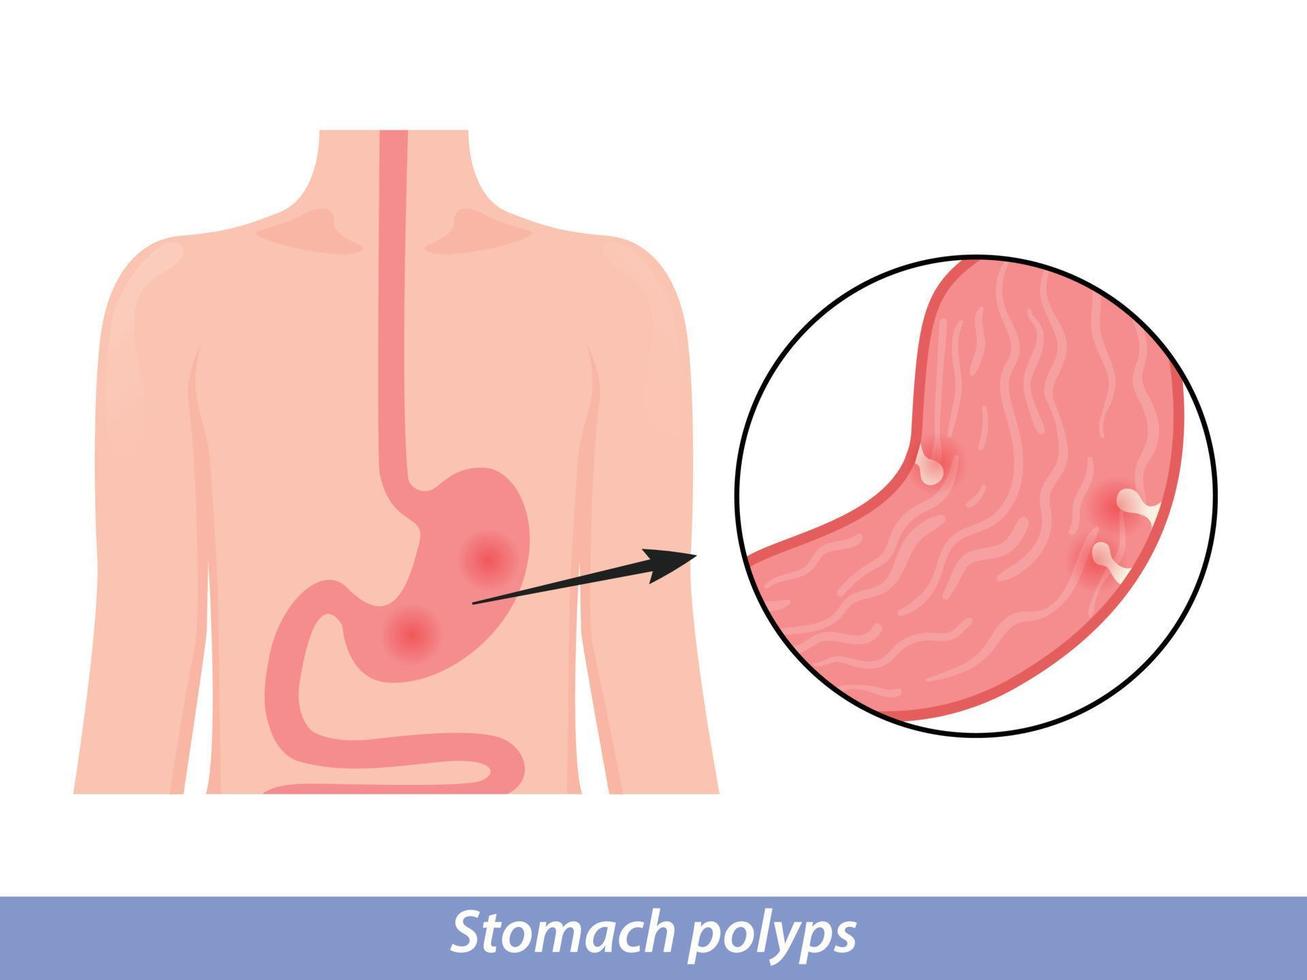 Stomach polyps diagnostic and removal. Endoscopy procedure concept vector